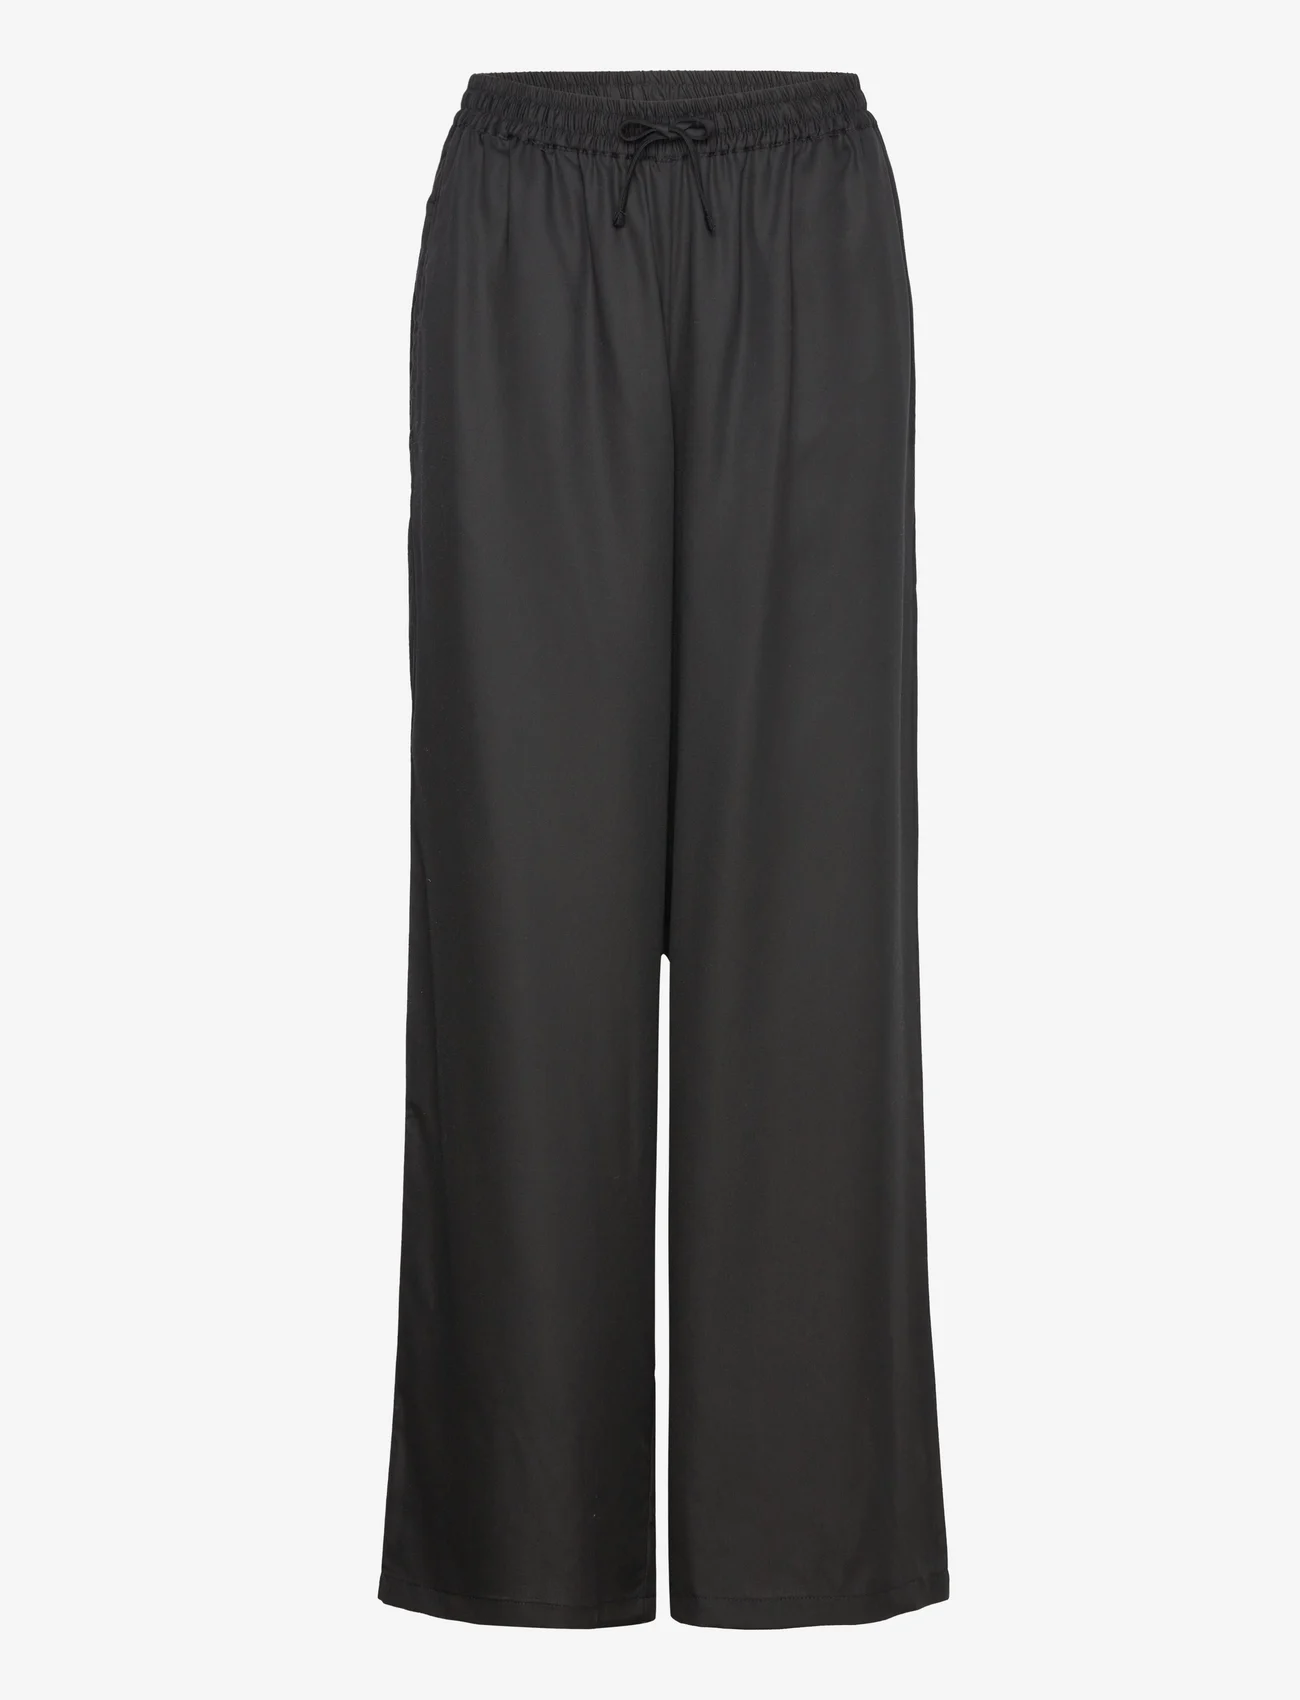 Makia - Ley Trousers - wide leg trousers - black - 0